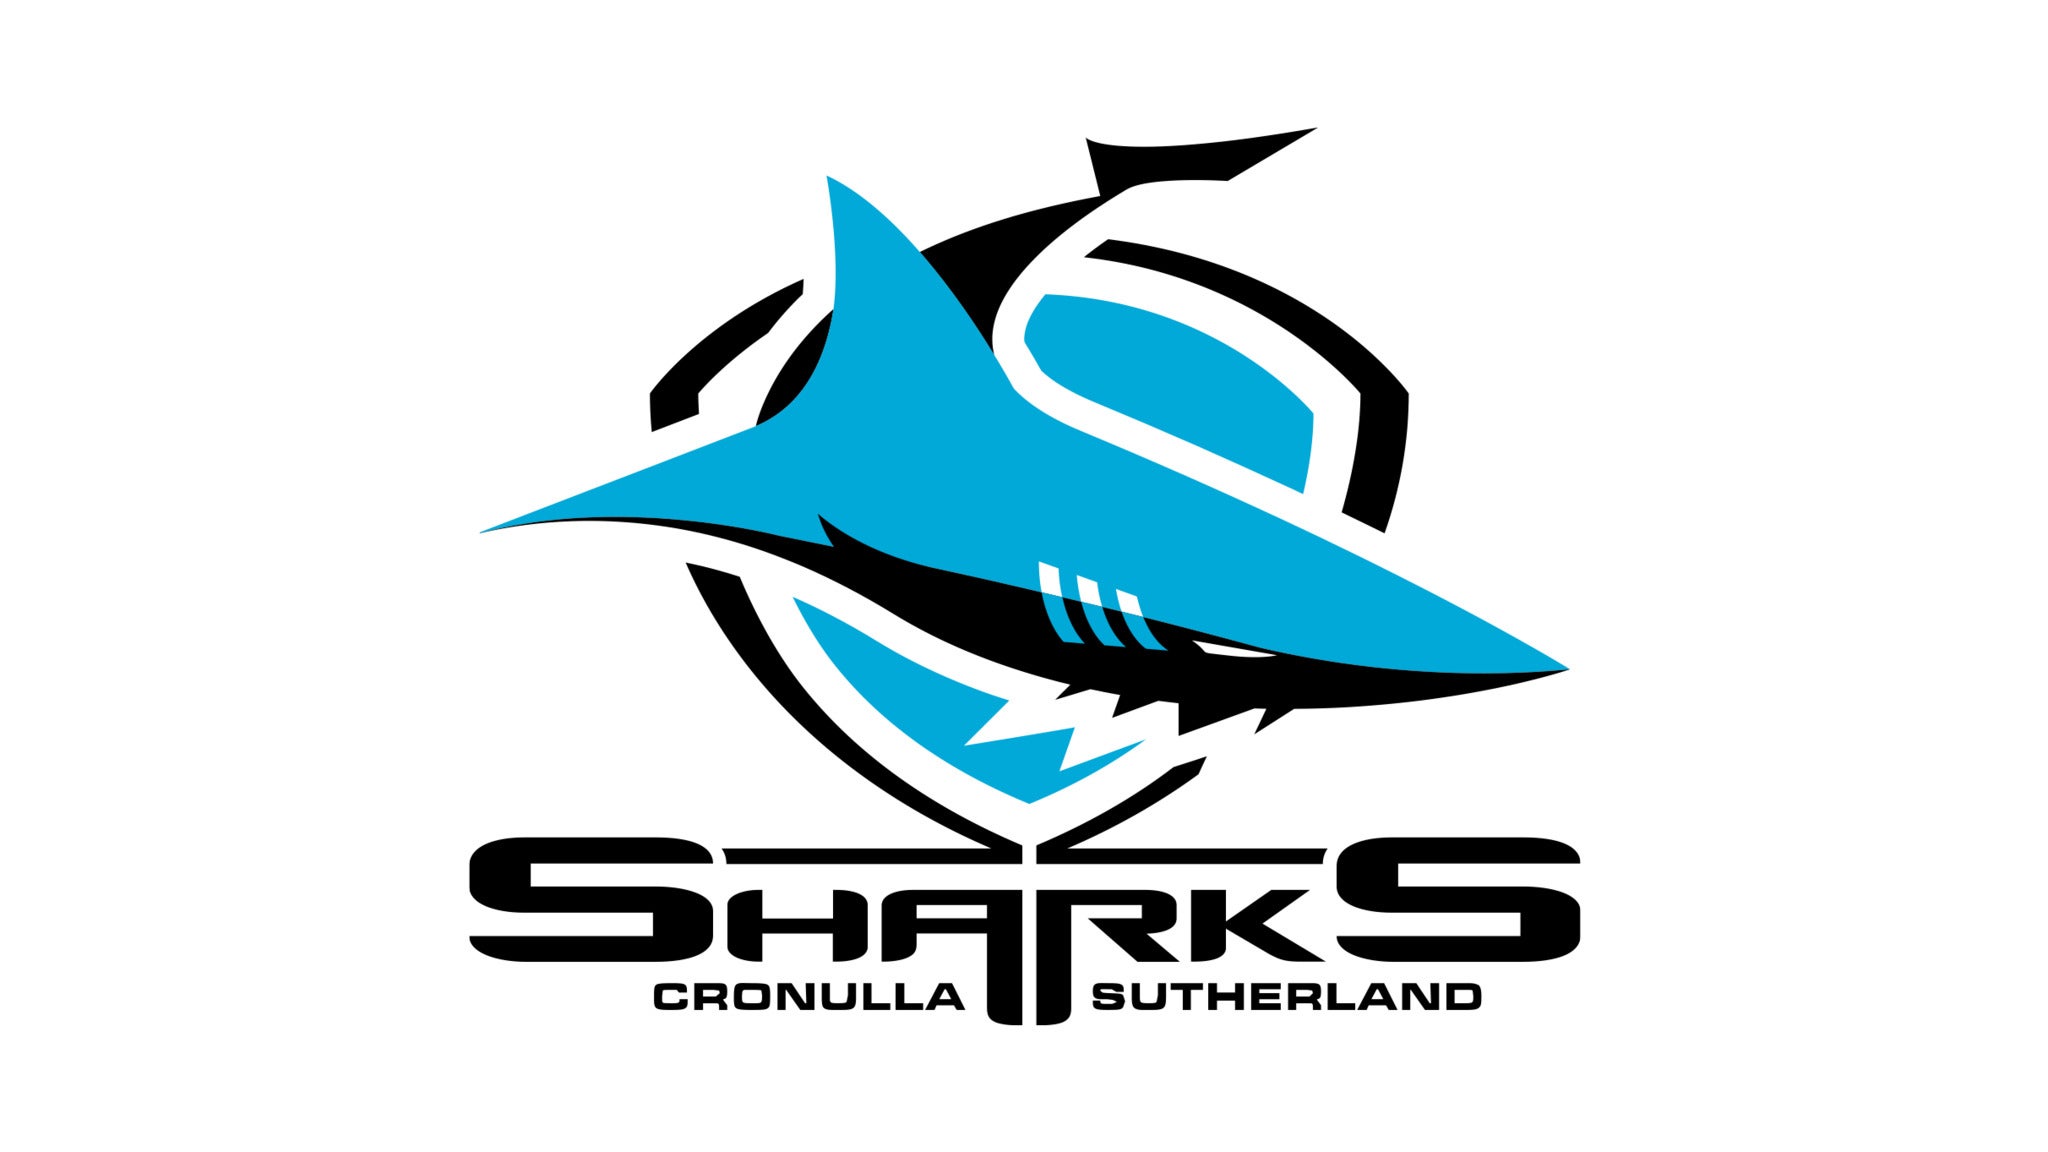 Cronulla Sutherland Sharks presale information on freepresalepasswords.com